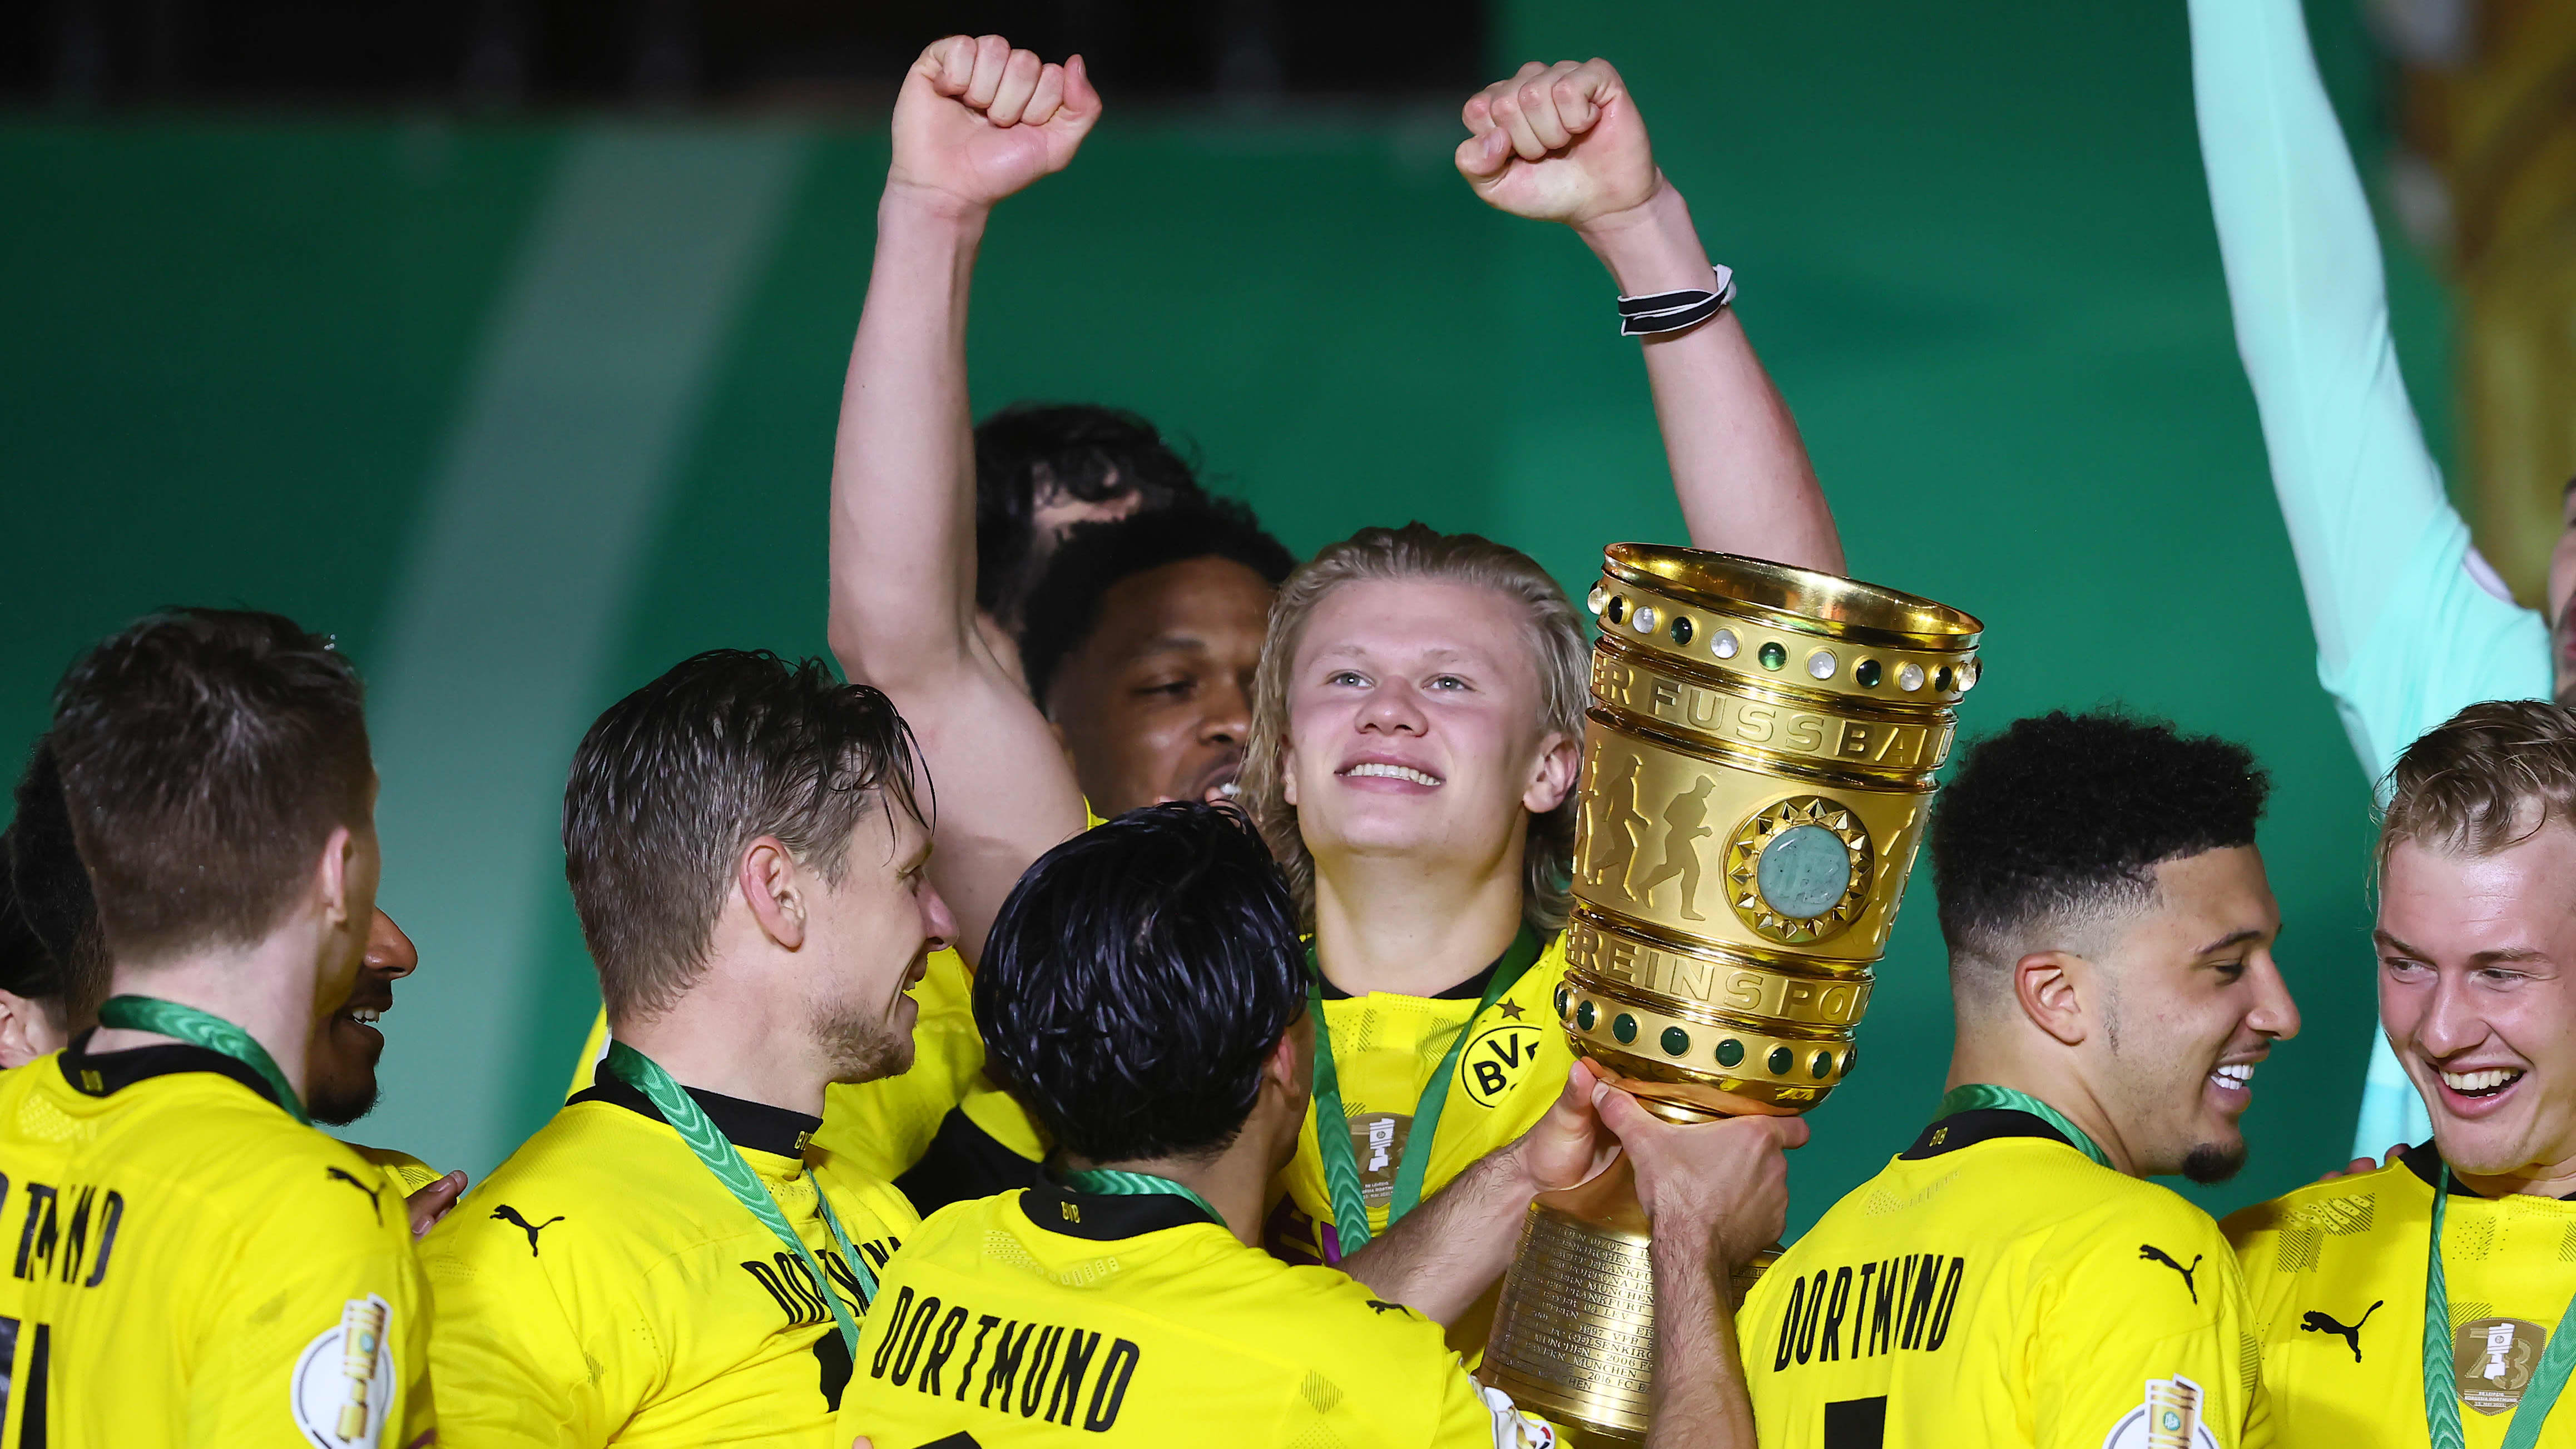 Erling Haaland ja Dortmund juhlivat cup-pokaalia